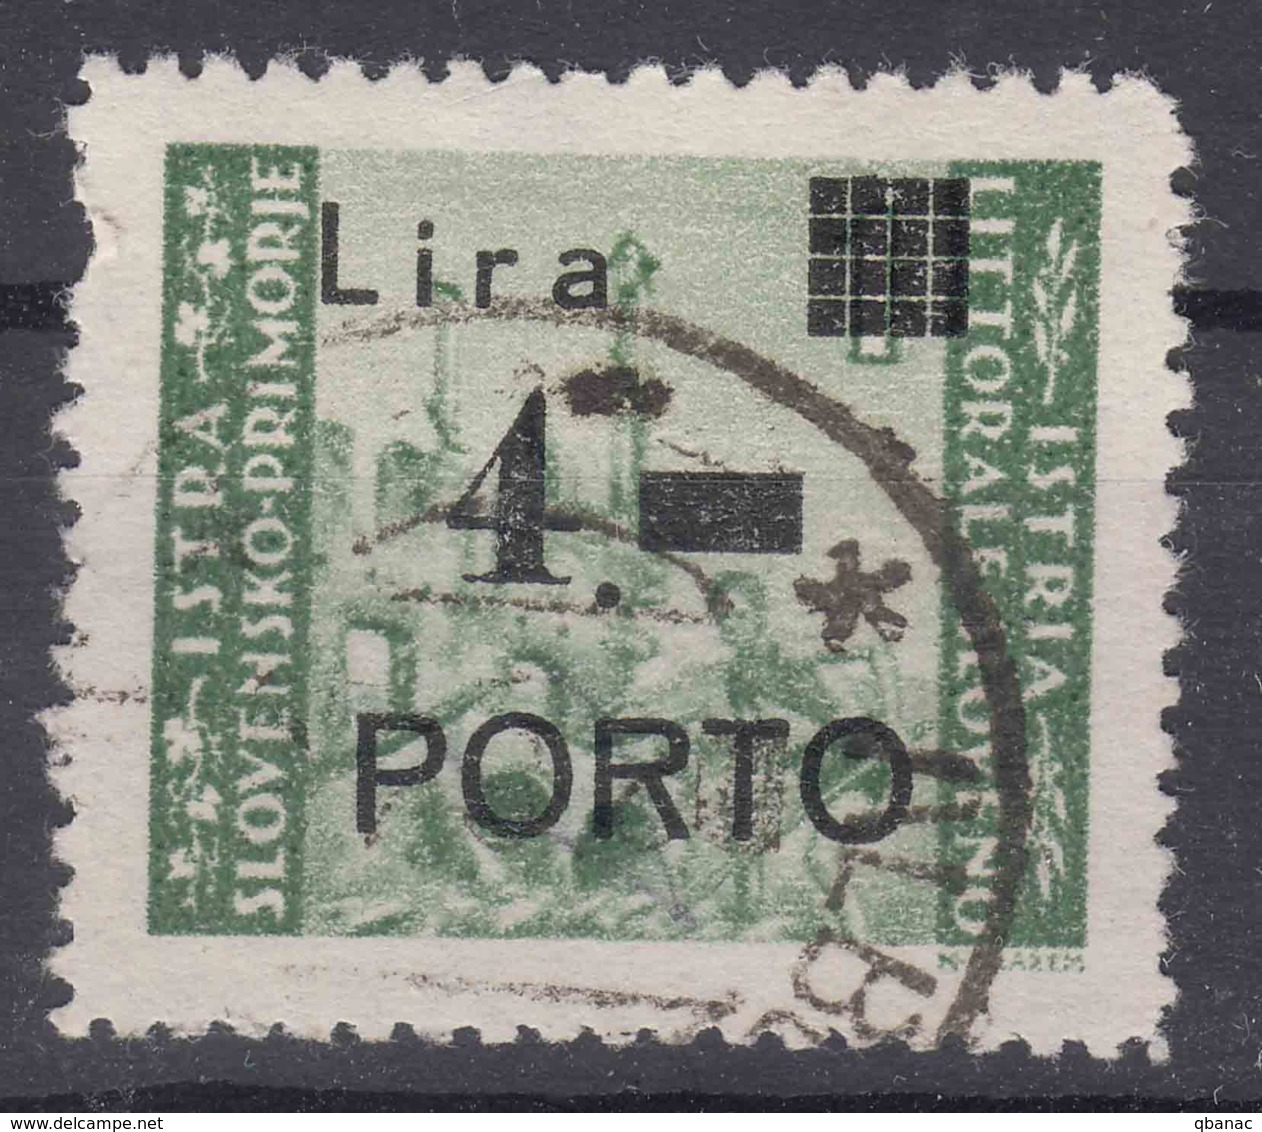 Istria Litorale Yugoslavia Occupation, Porto 1946 Sassone#10 Error - Point Circuit (punto Tondo) Used - Yugoslavian Occ.: Istria